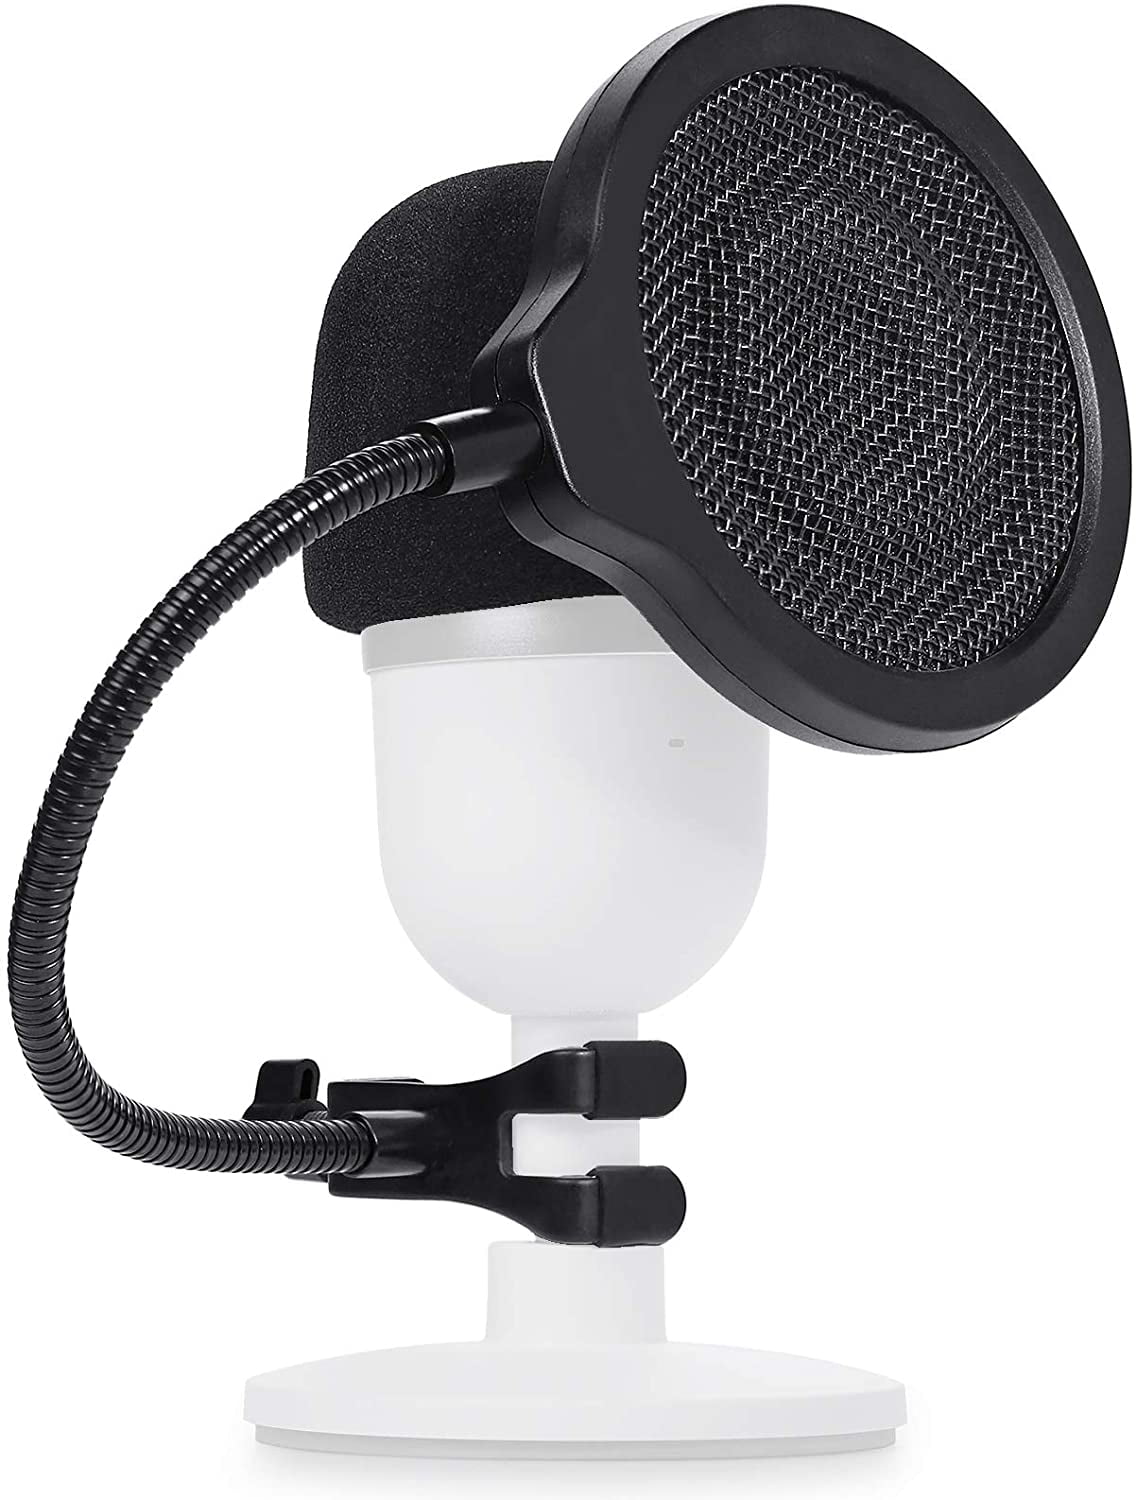 Youshares Blue Snowball Pop Filter Customizing Microphone Windscreen Foam Cove 